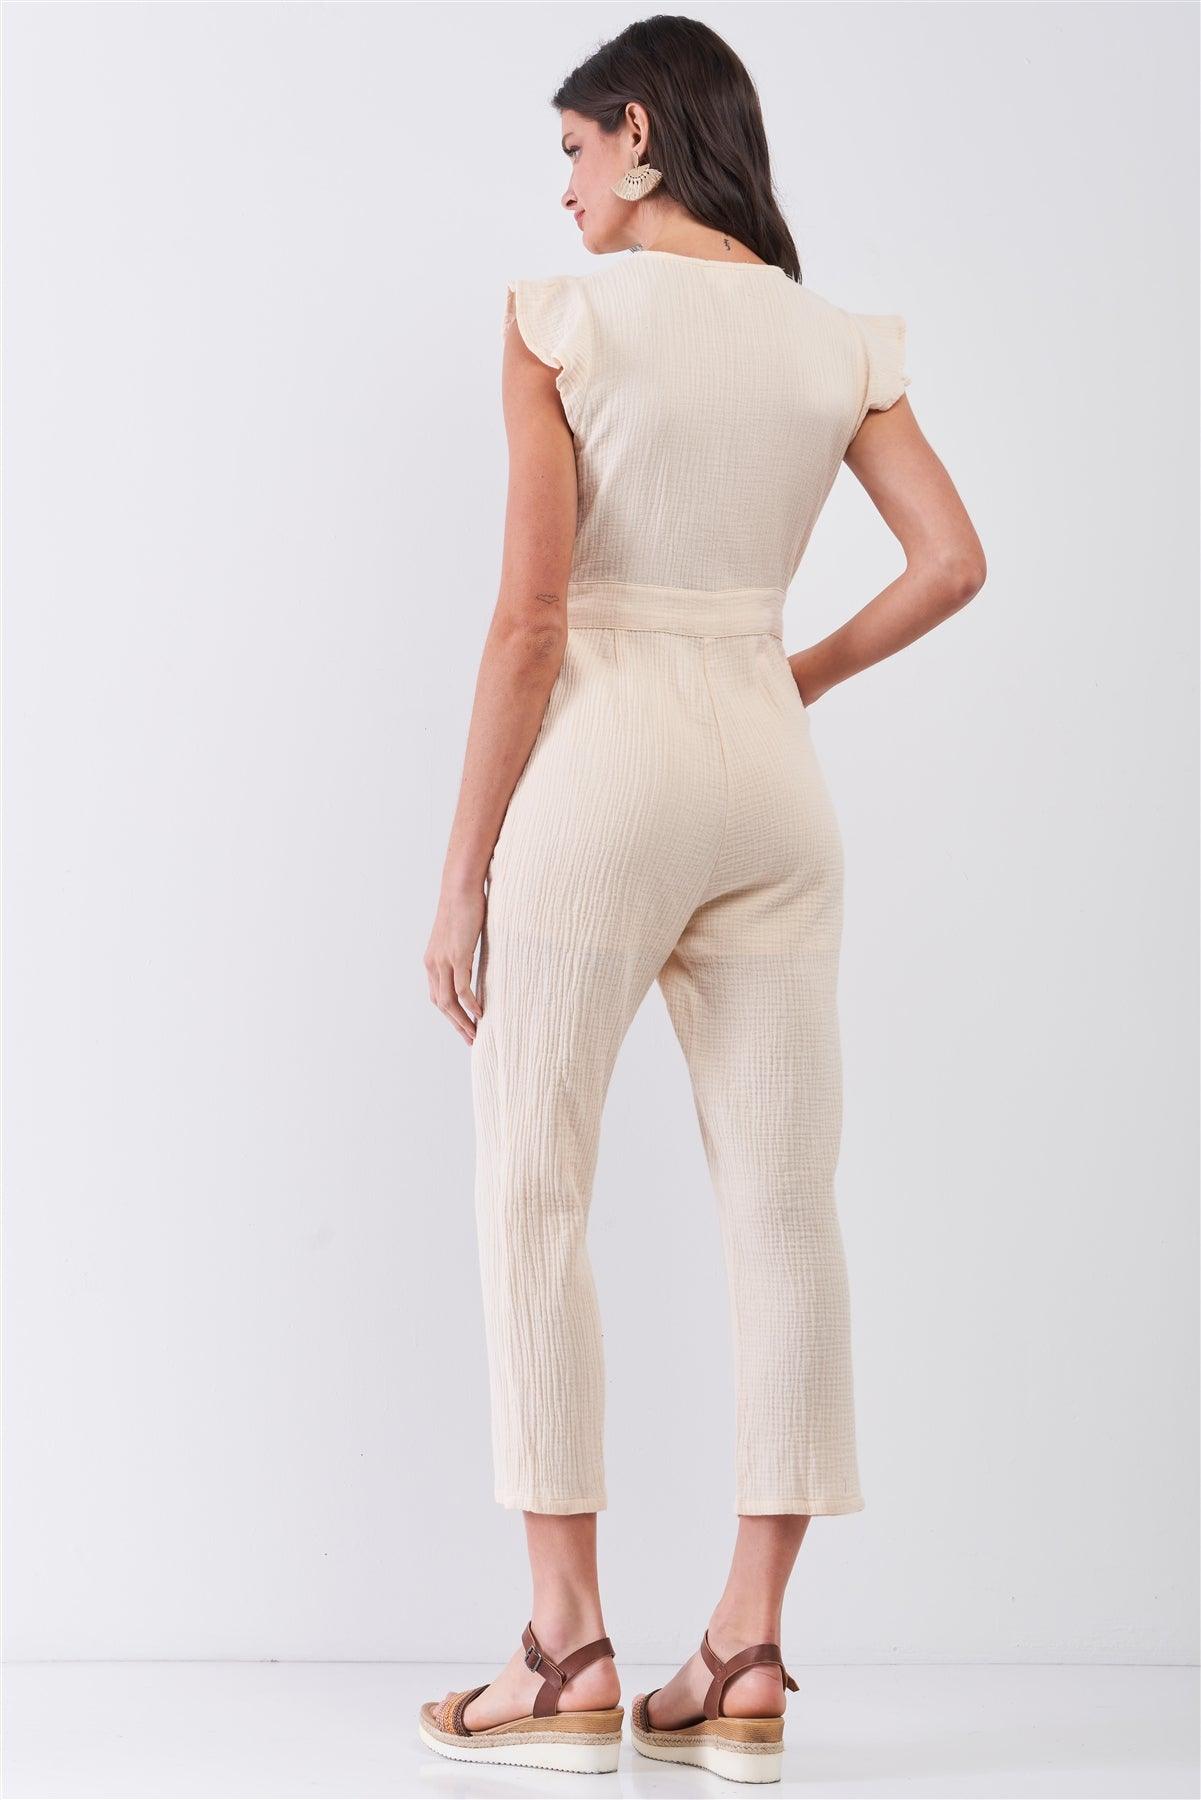 Beige Sleeveless Stylized Button-Down Front Detail Self-Tie Waist Capri Cotton Jumpsuit /3-2-1